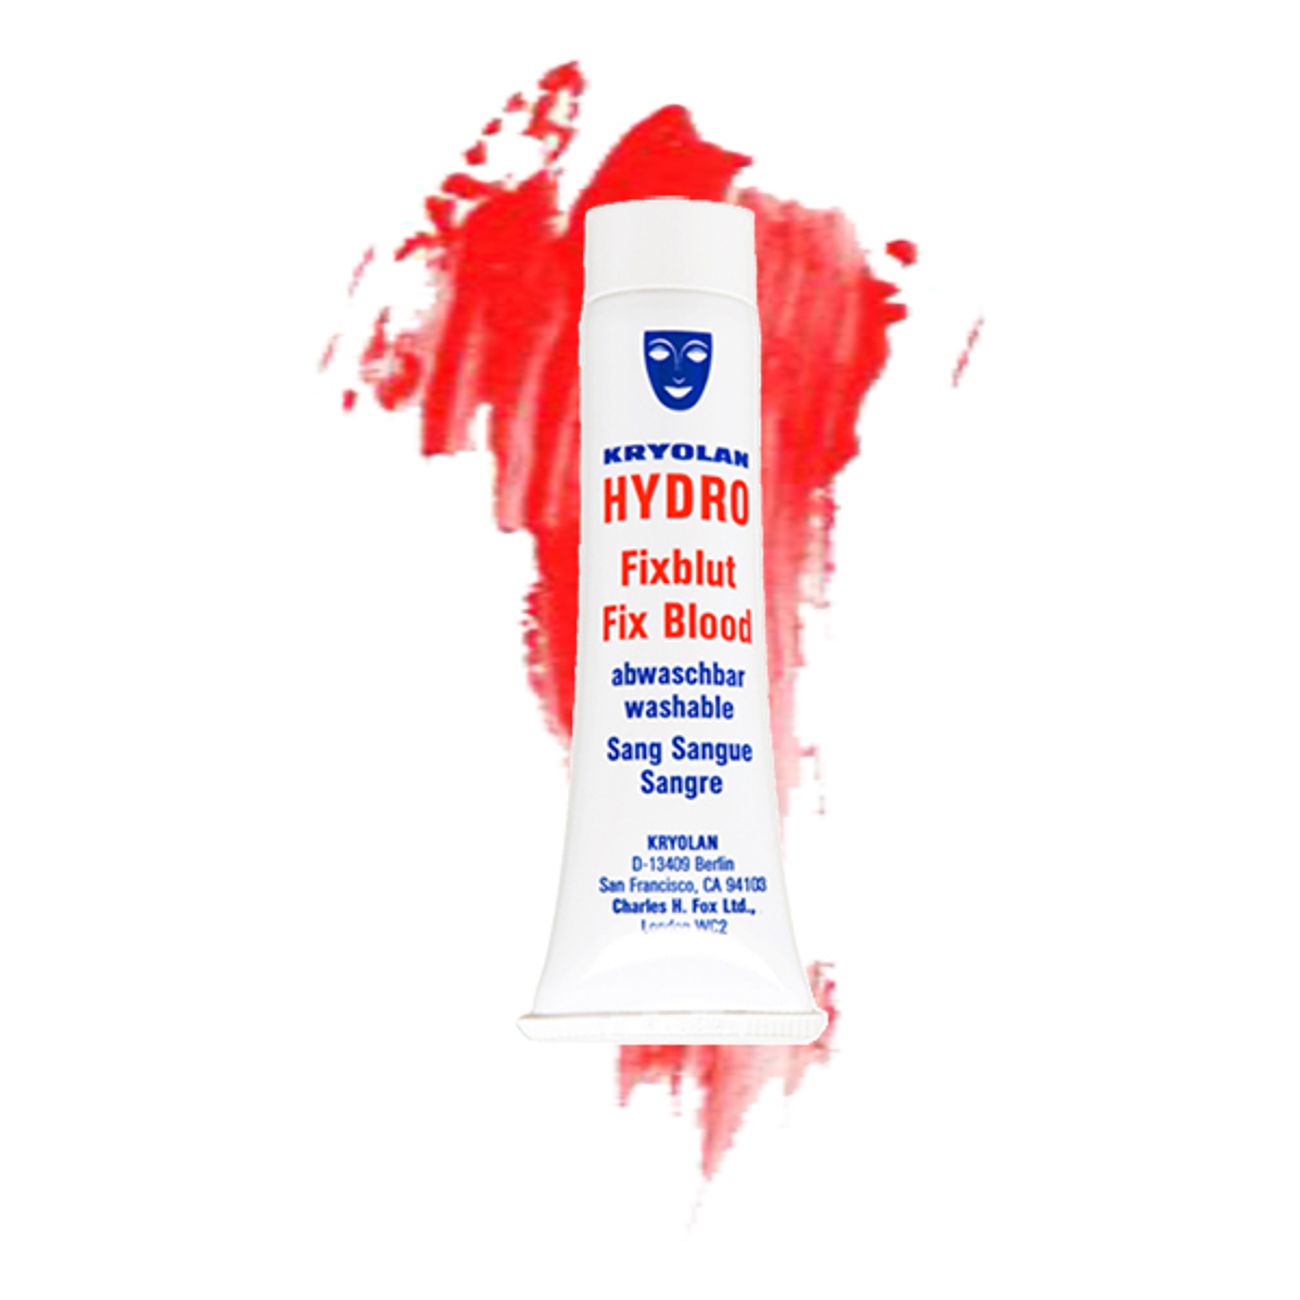 kryolan-hydro-fix-blod-3